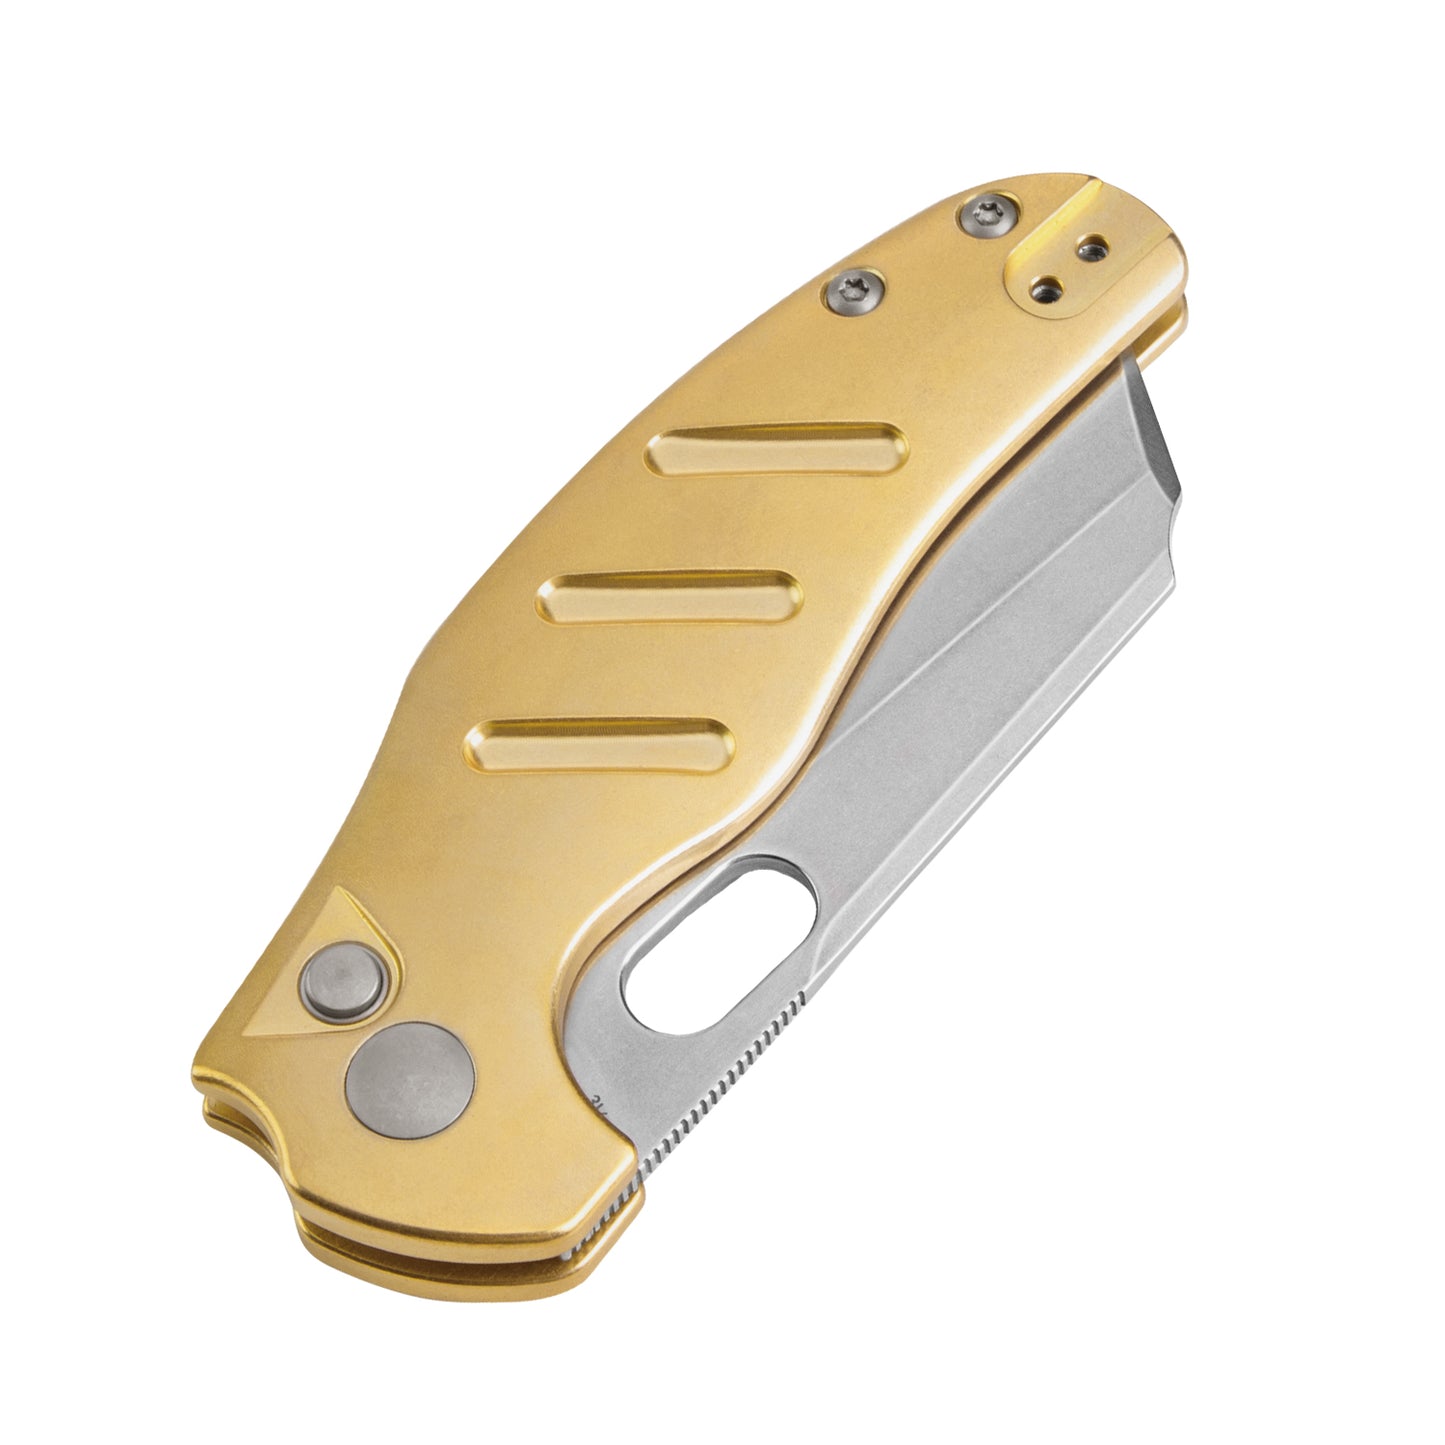 Kizer Sheepdog C01C 3.29" 3V Button-Lock Brass Folding Knife V4488BC2